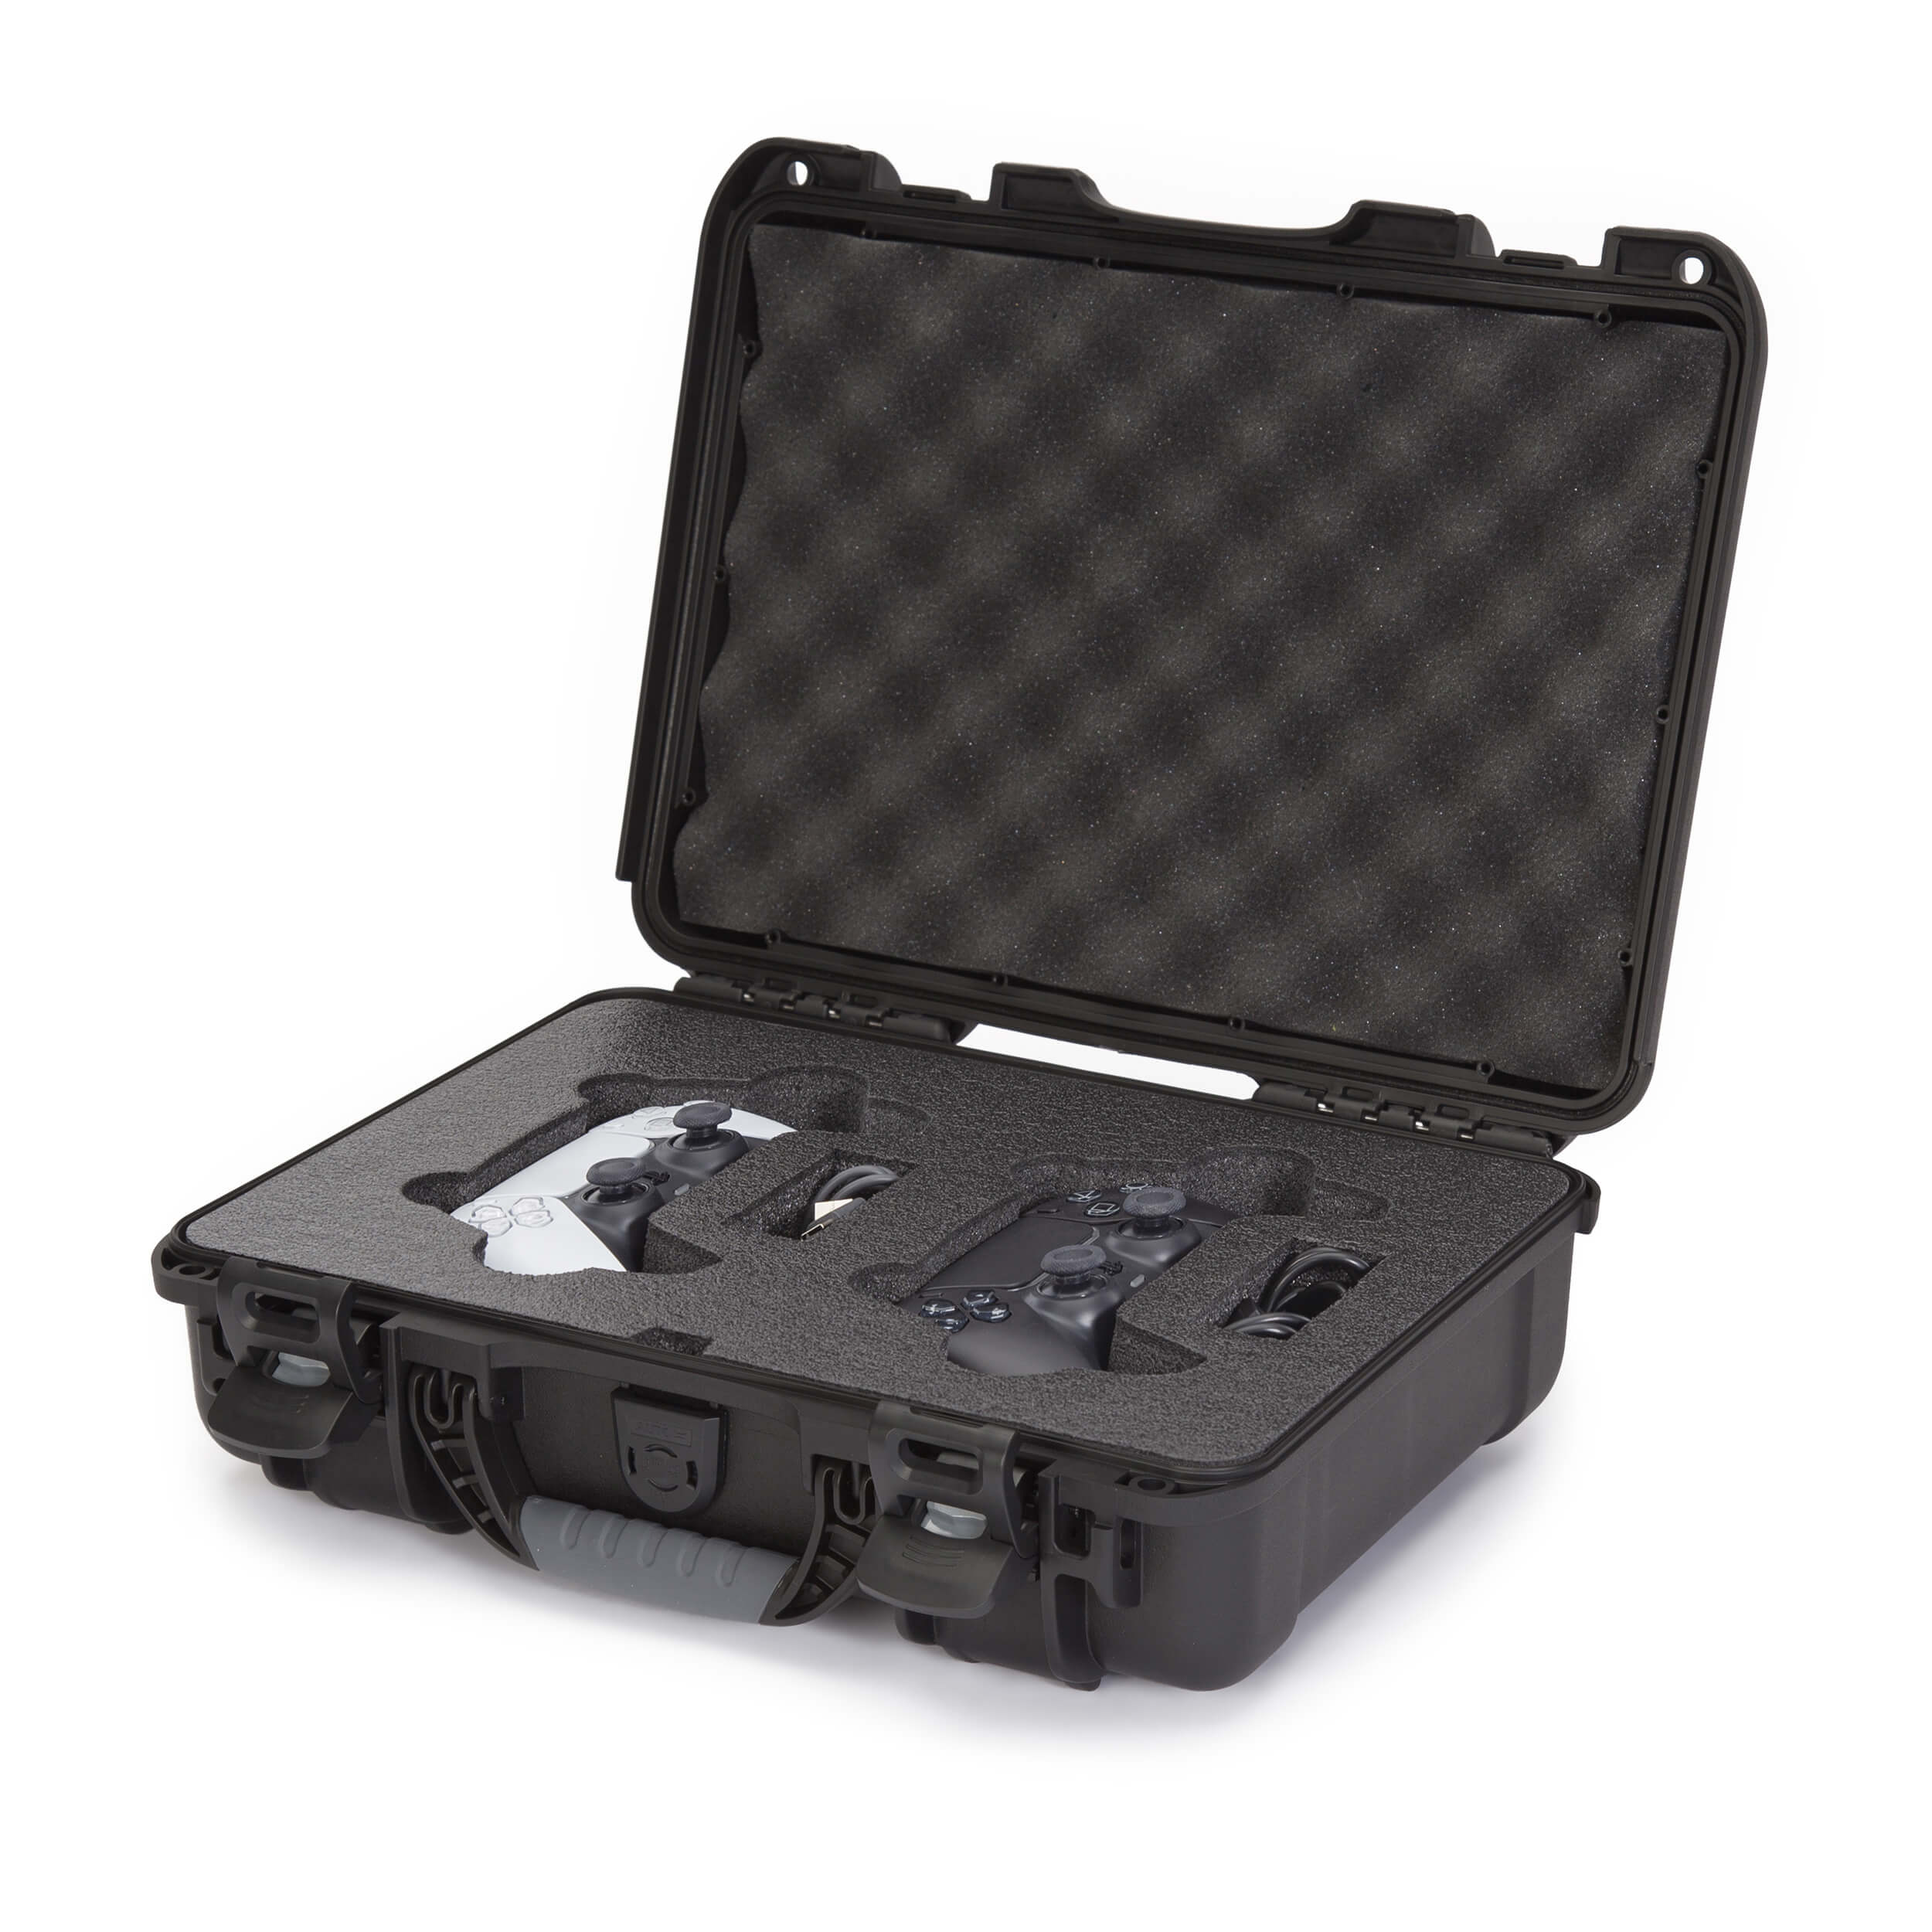 ArmaCase AC5500BF BLACK Watertight Case, FULL FOAM, 17x11.8x11.8